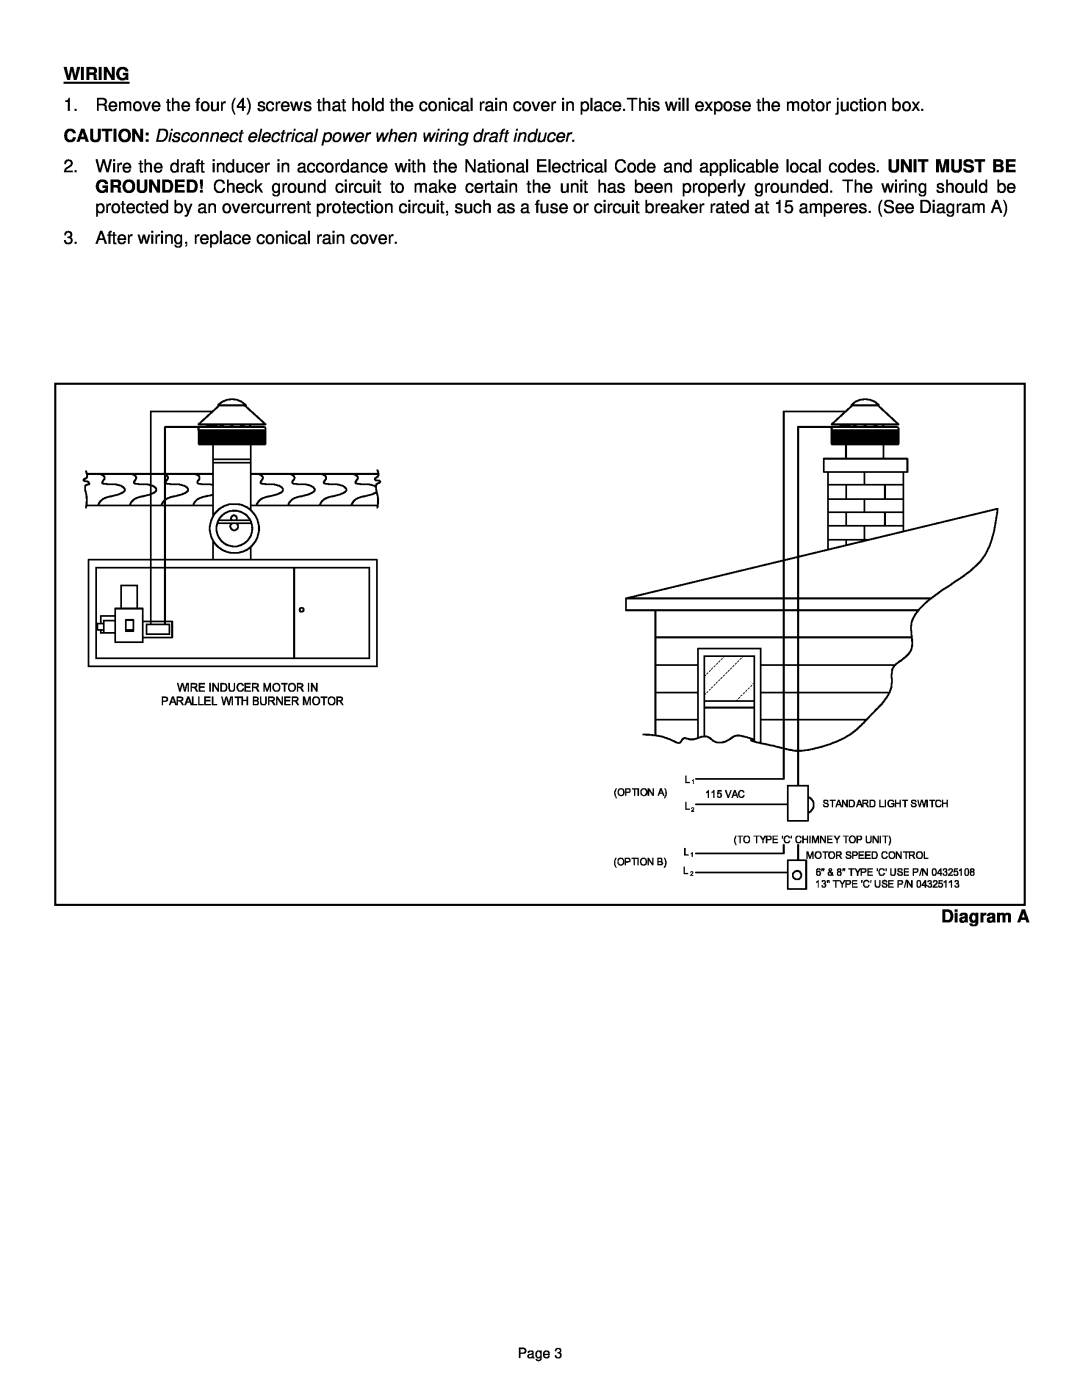 Field Controls TYPE "C manual Wiring, Diagram A 